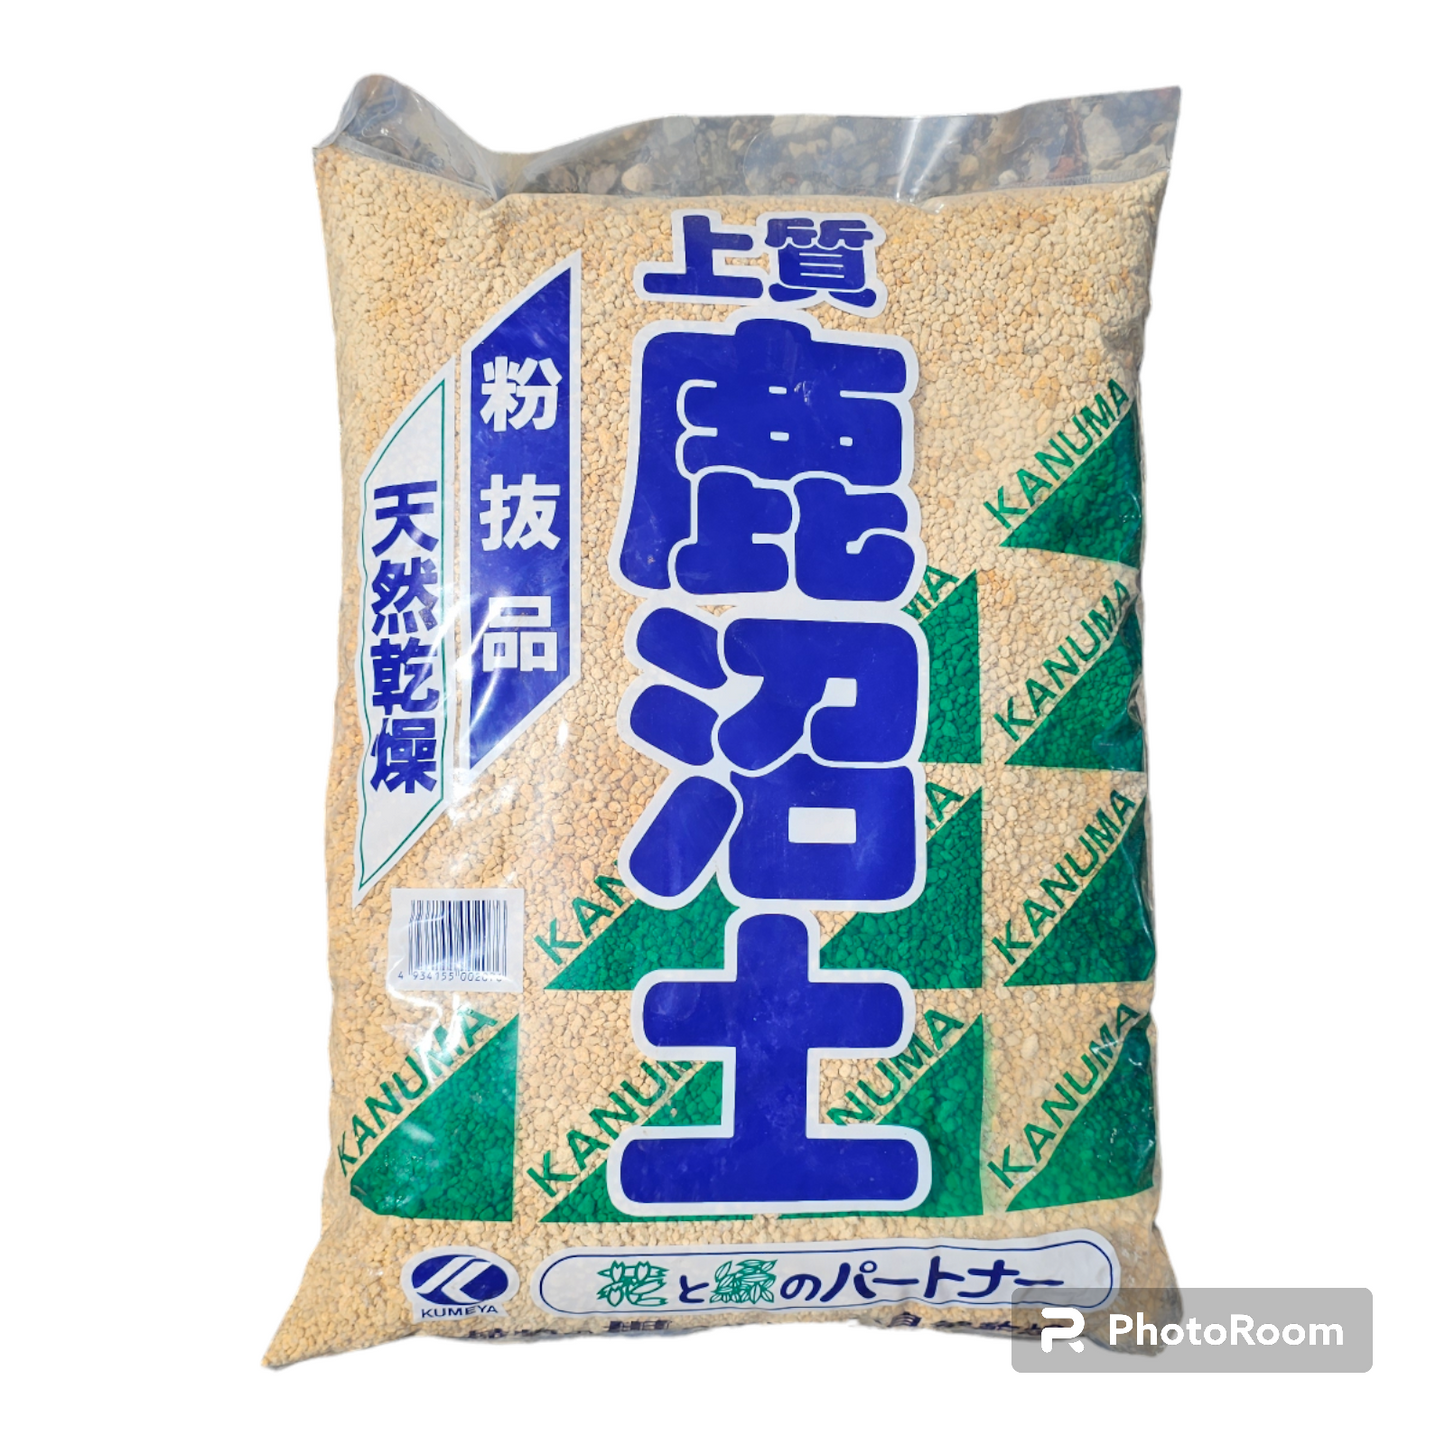 Kanuma - Japanese Bonsai Soil - Acidic Substrate for Azaleas - 14l Bag (@ 3 gallons)